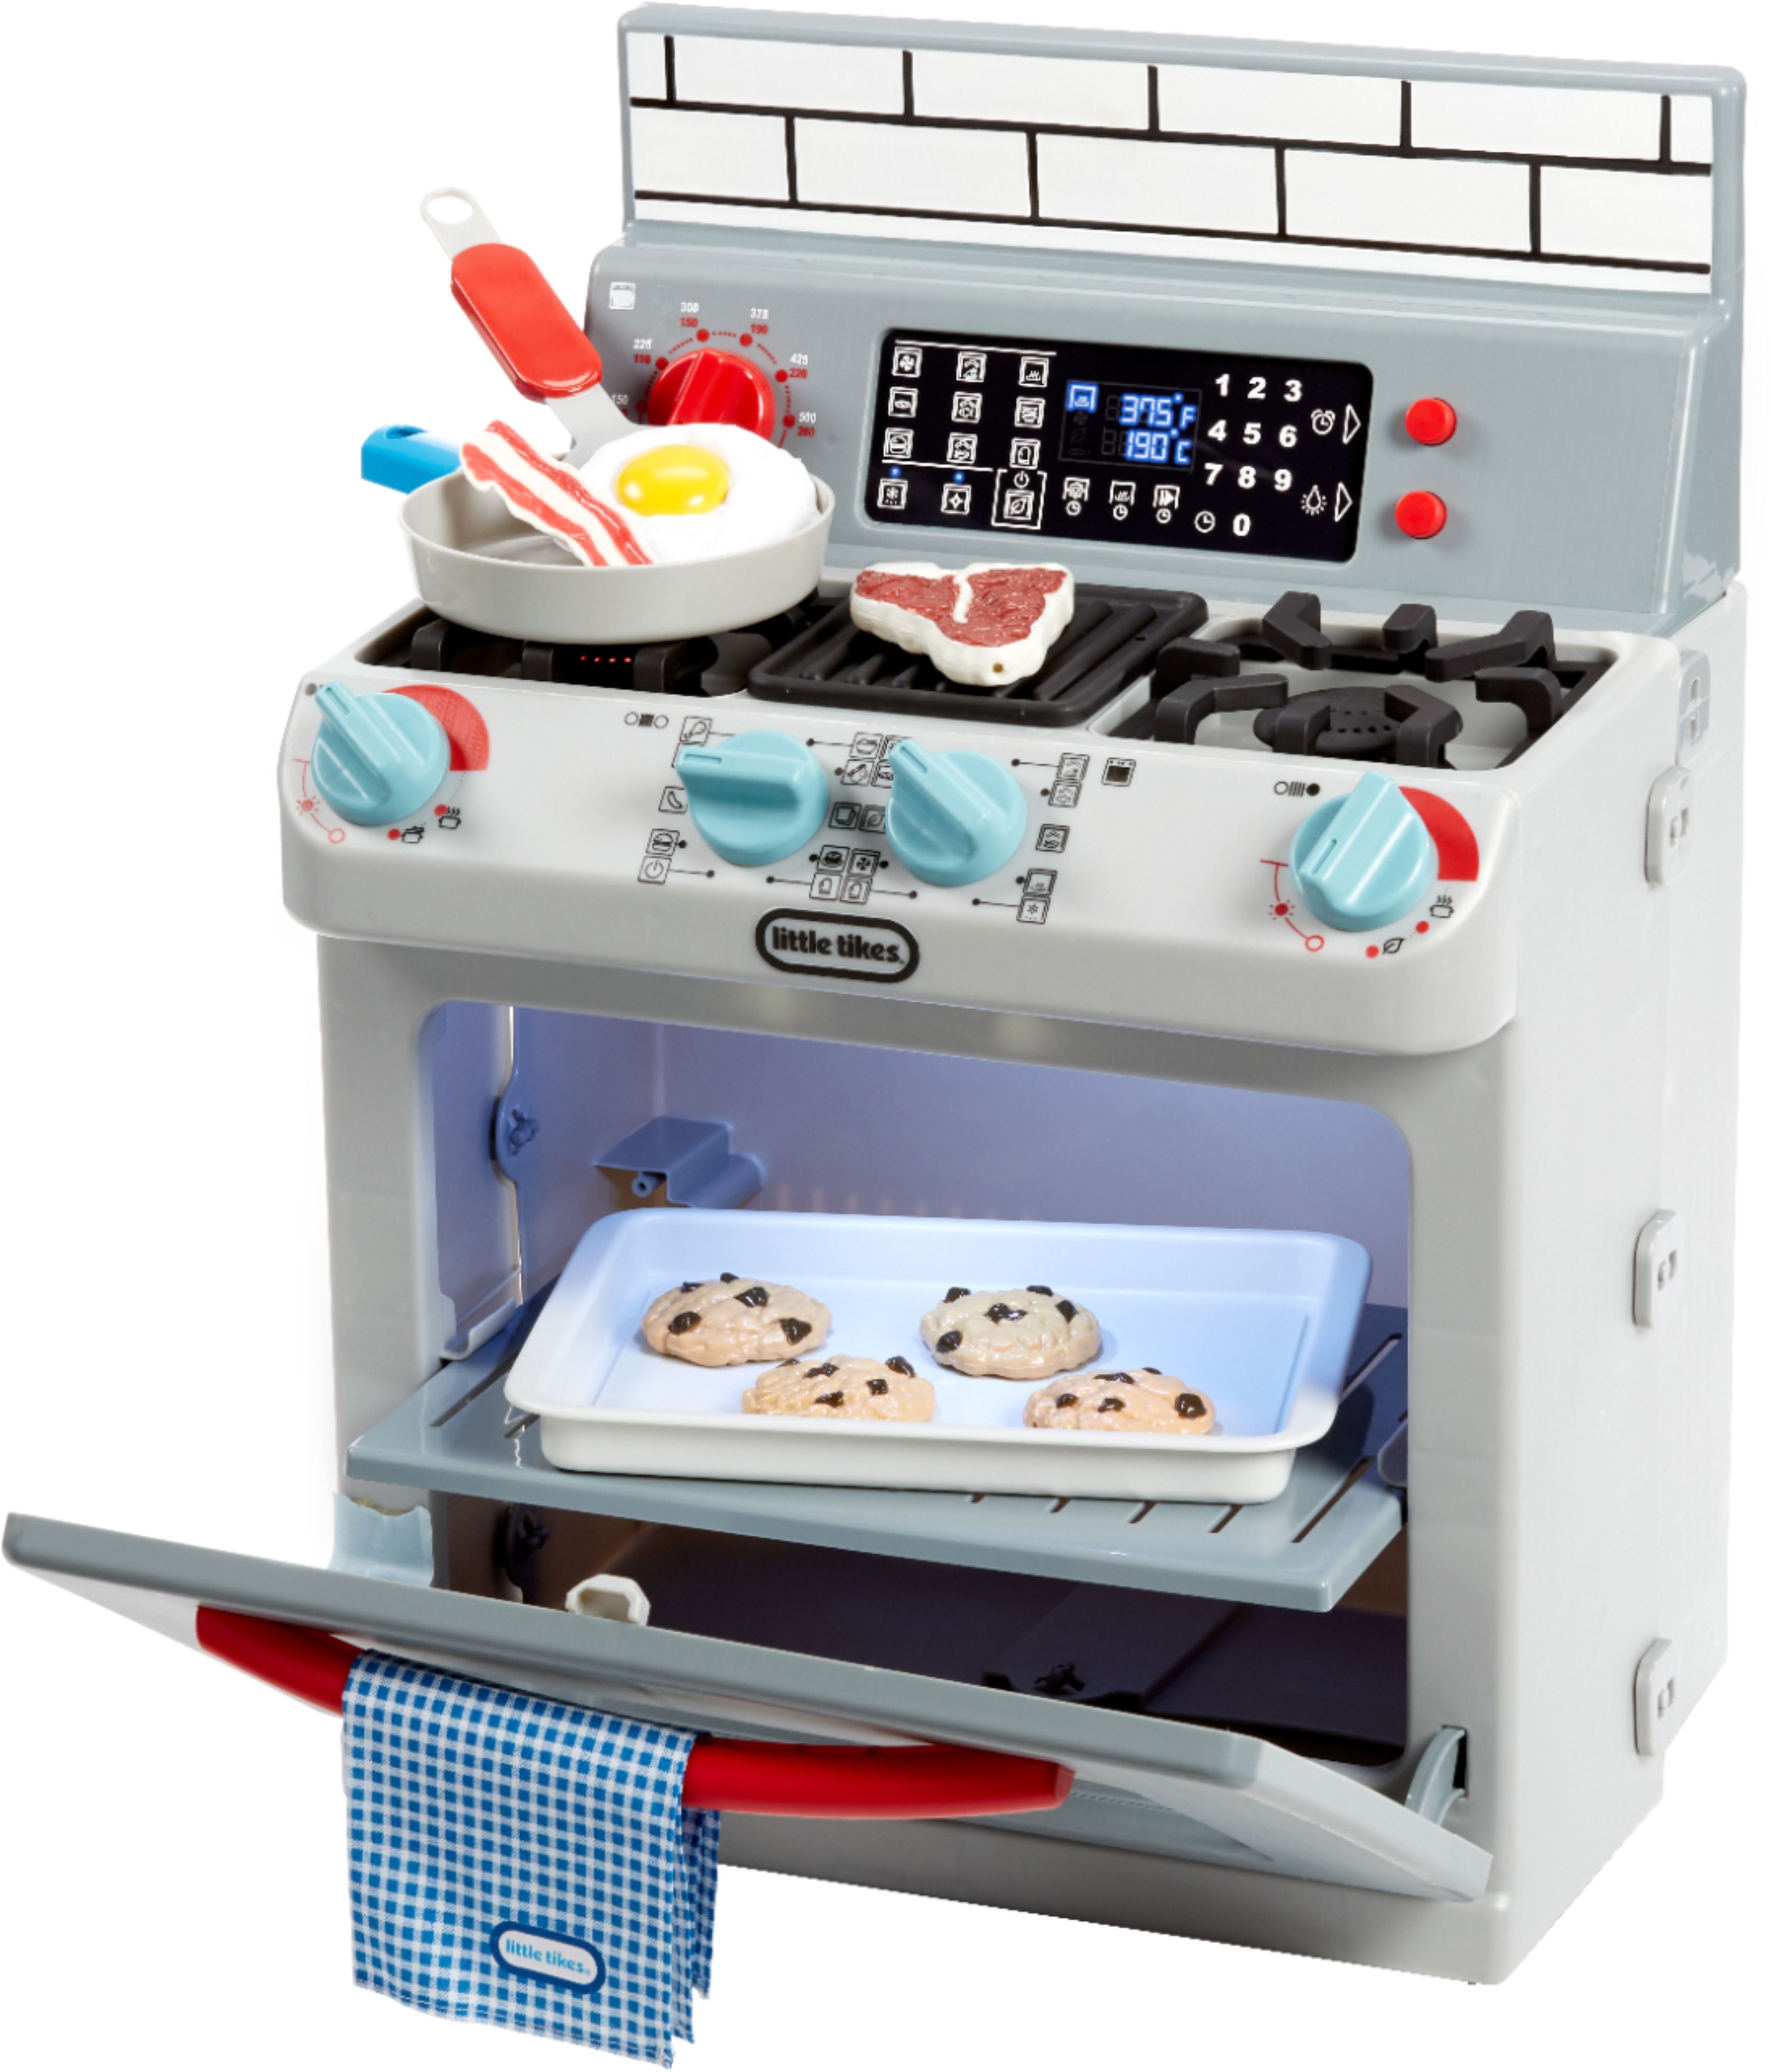 Easy Bake Oven - baby & kid stuff - by owner - household sale - craigslist